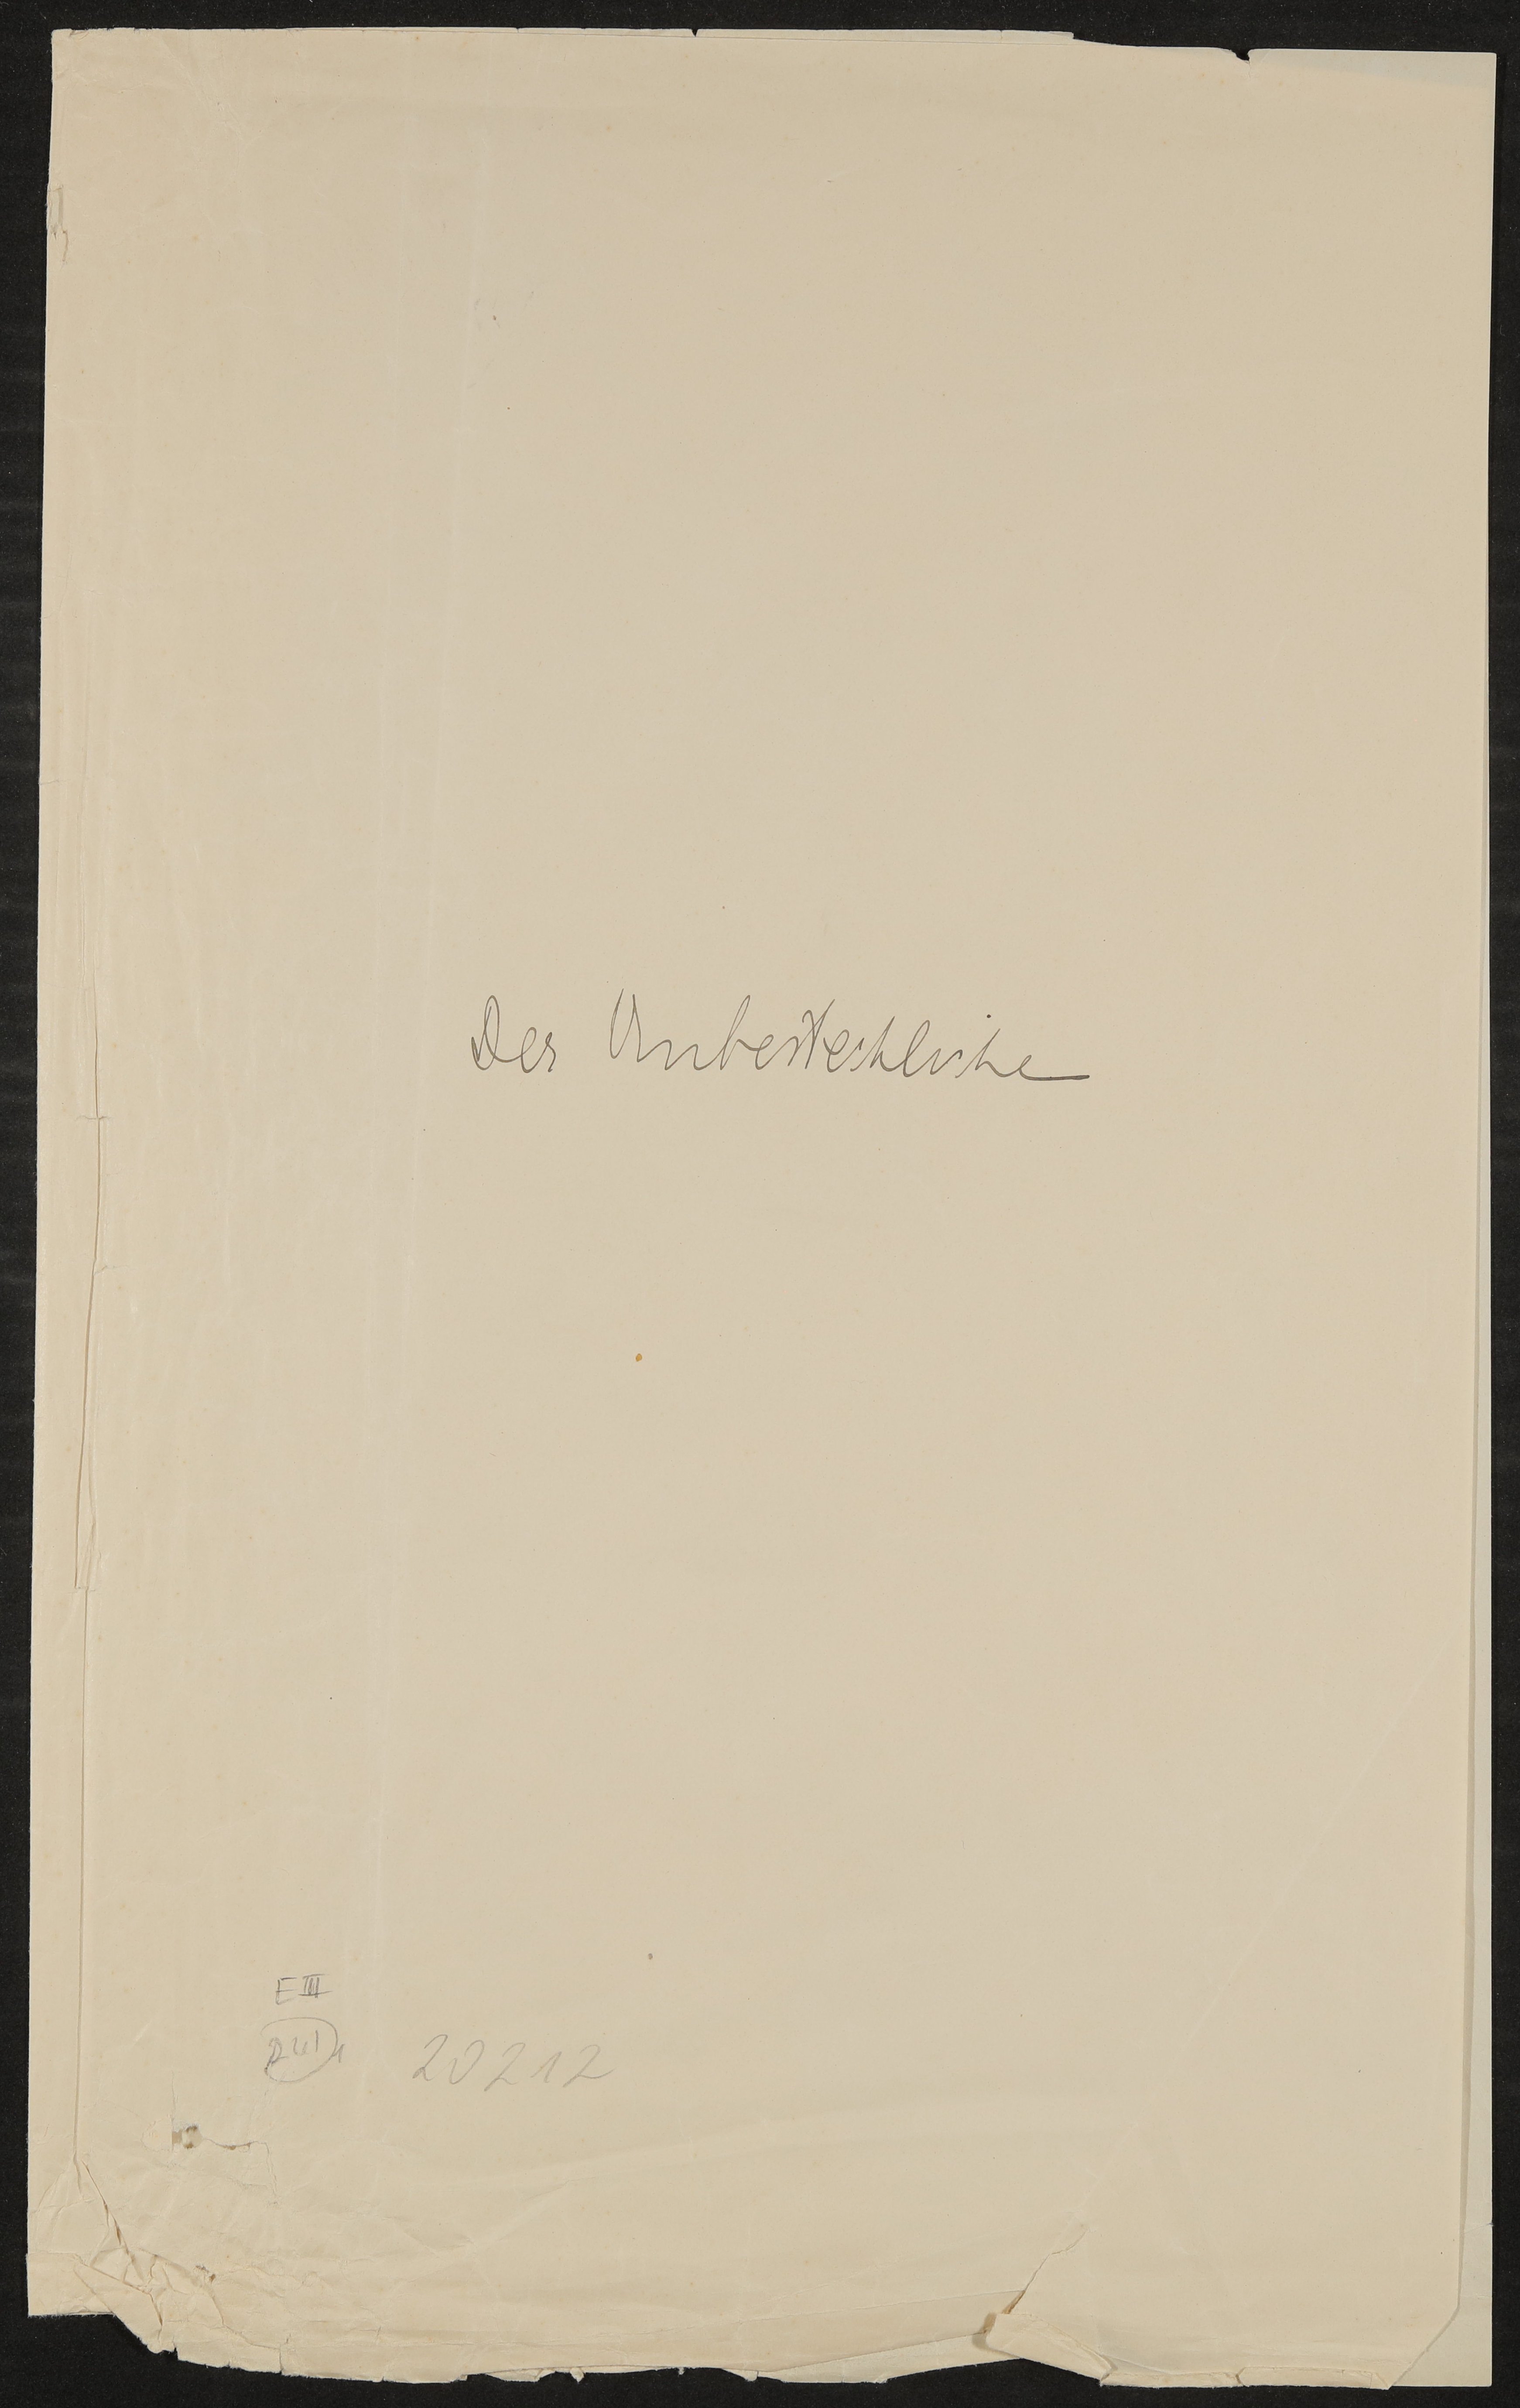 H28_Hs-20212_EIII261_002 (Freies Deutsches Hochstift / Frankfurter Goethe-Museum Public Domain Mark)